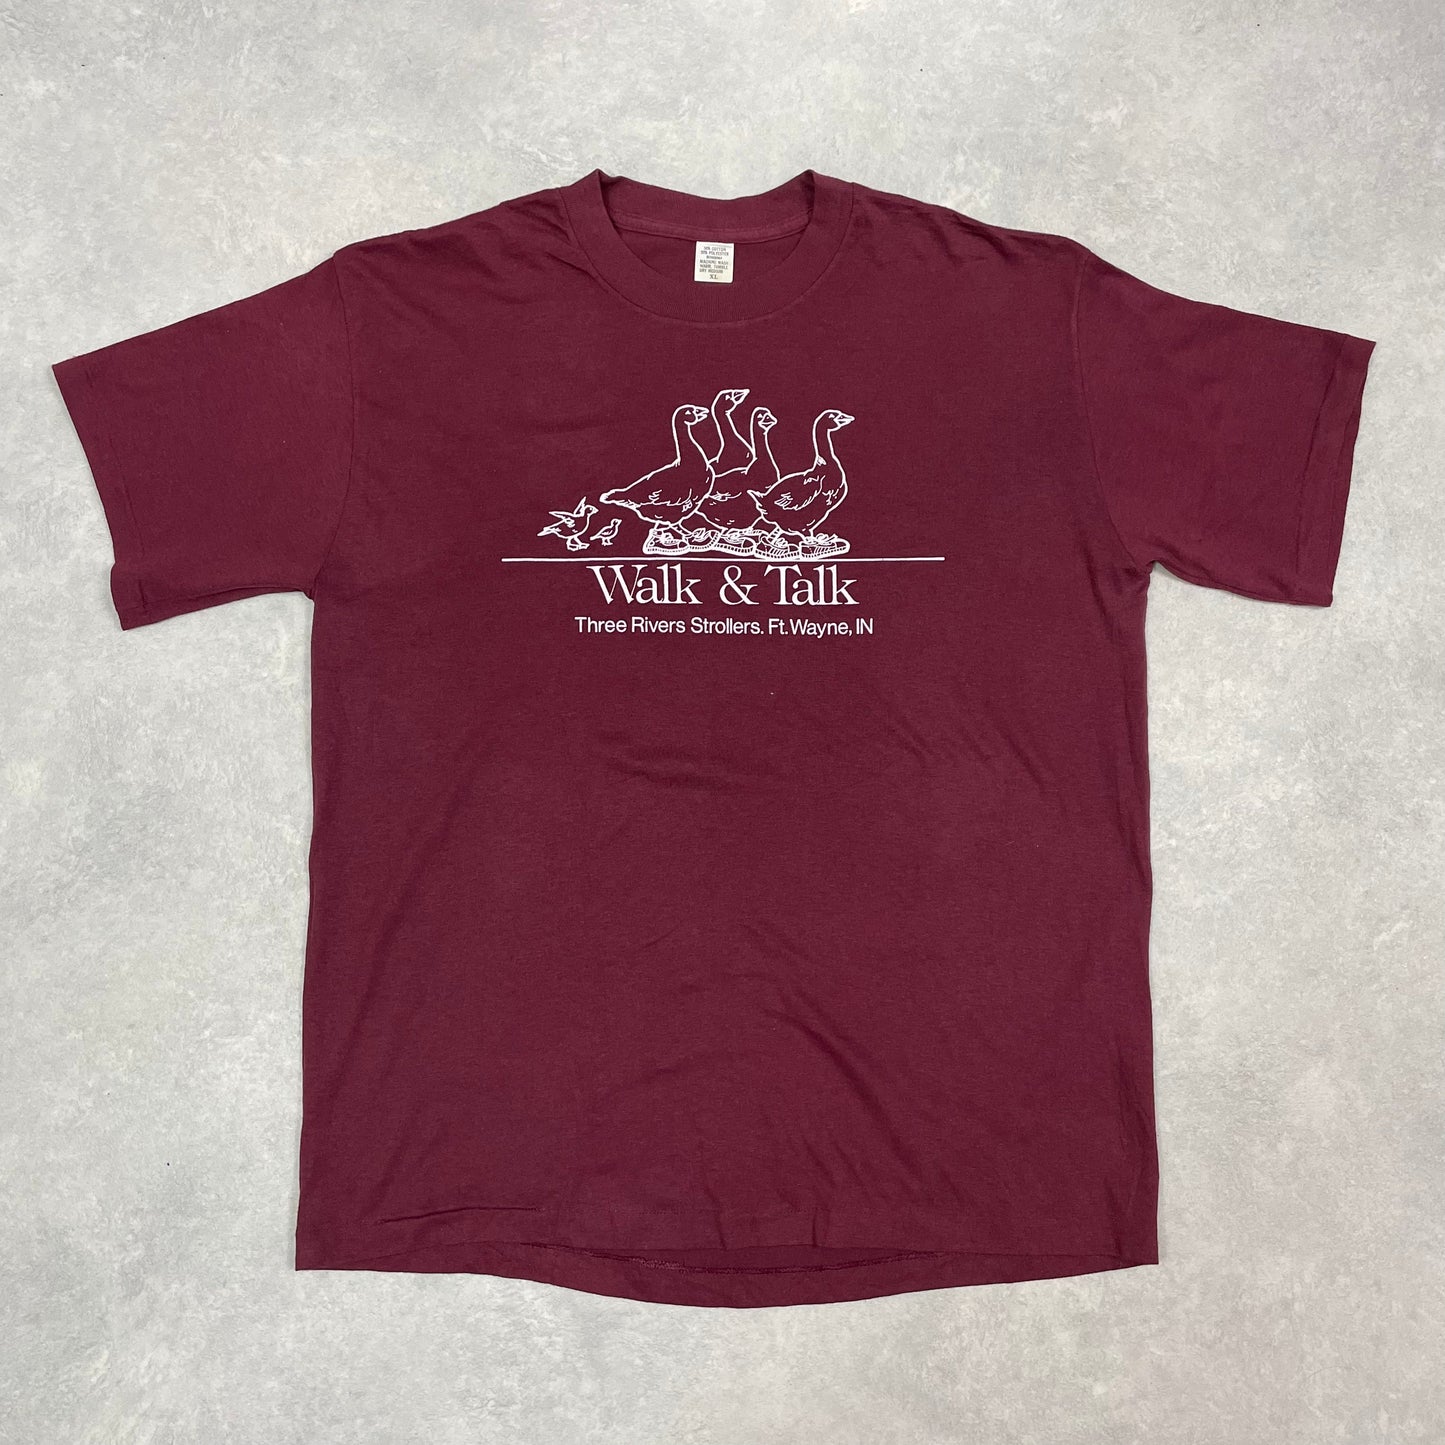 Vintage Single Stitch T-Shirt Made in USA “Walk & Talk Three Rivers Strollers”